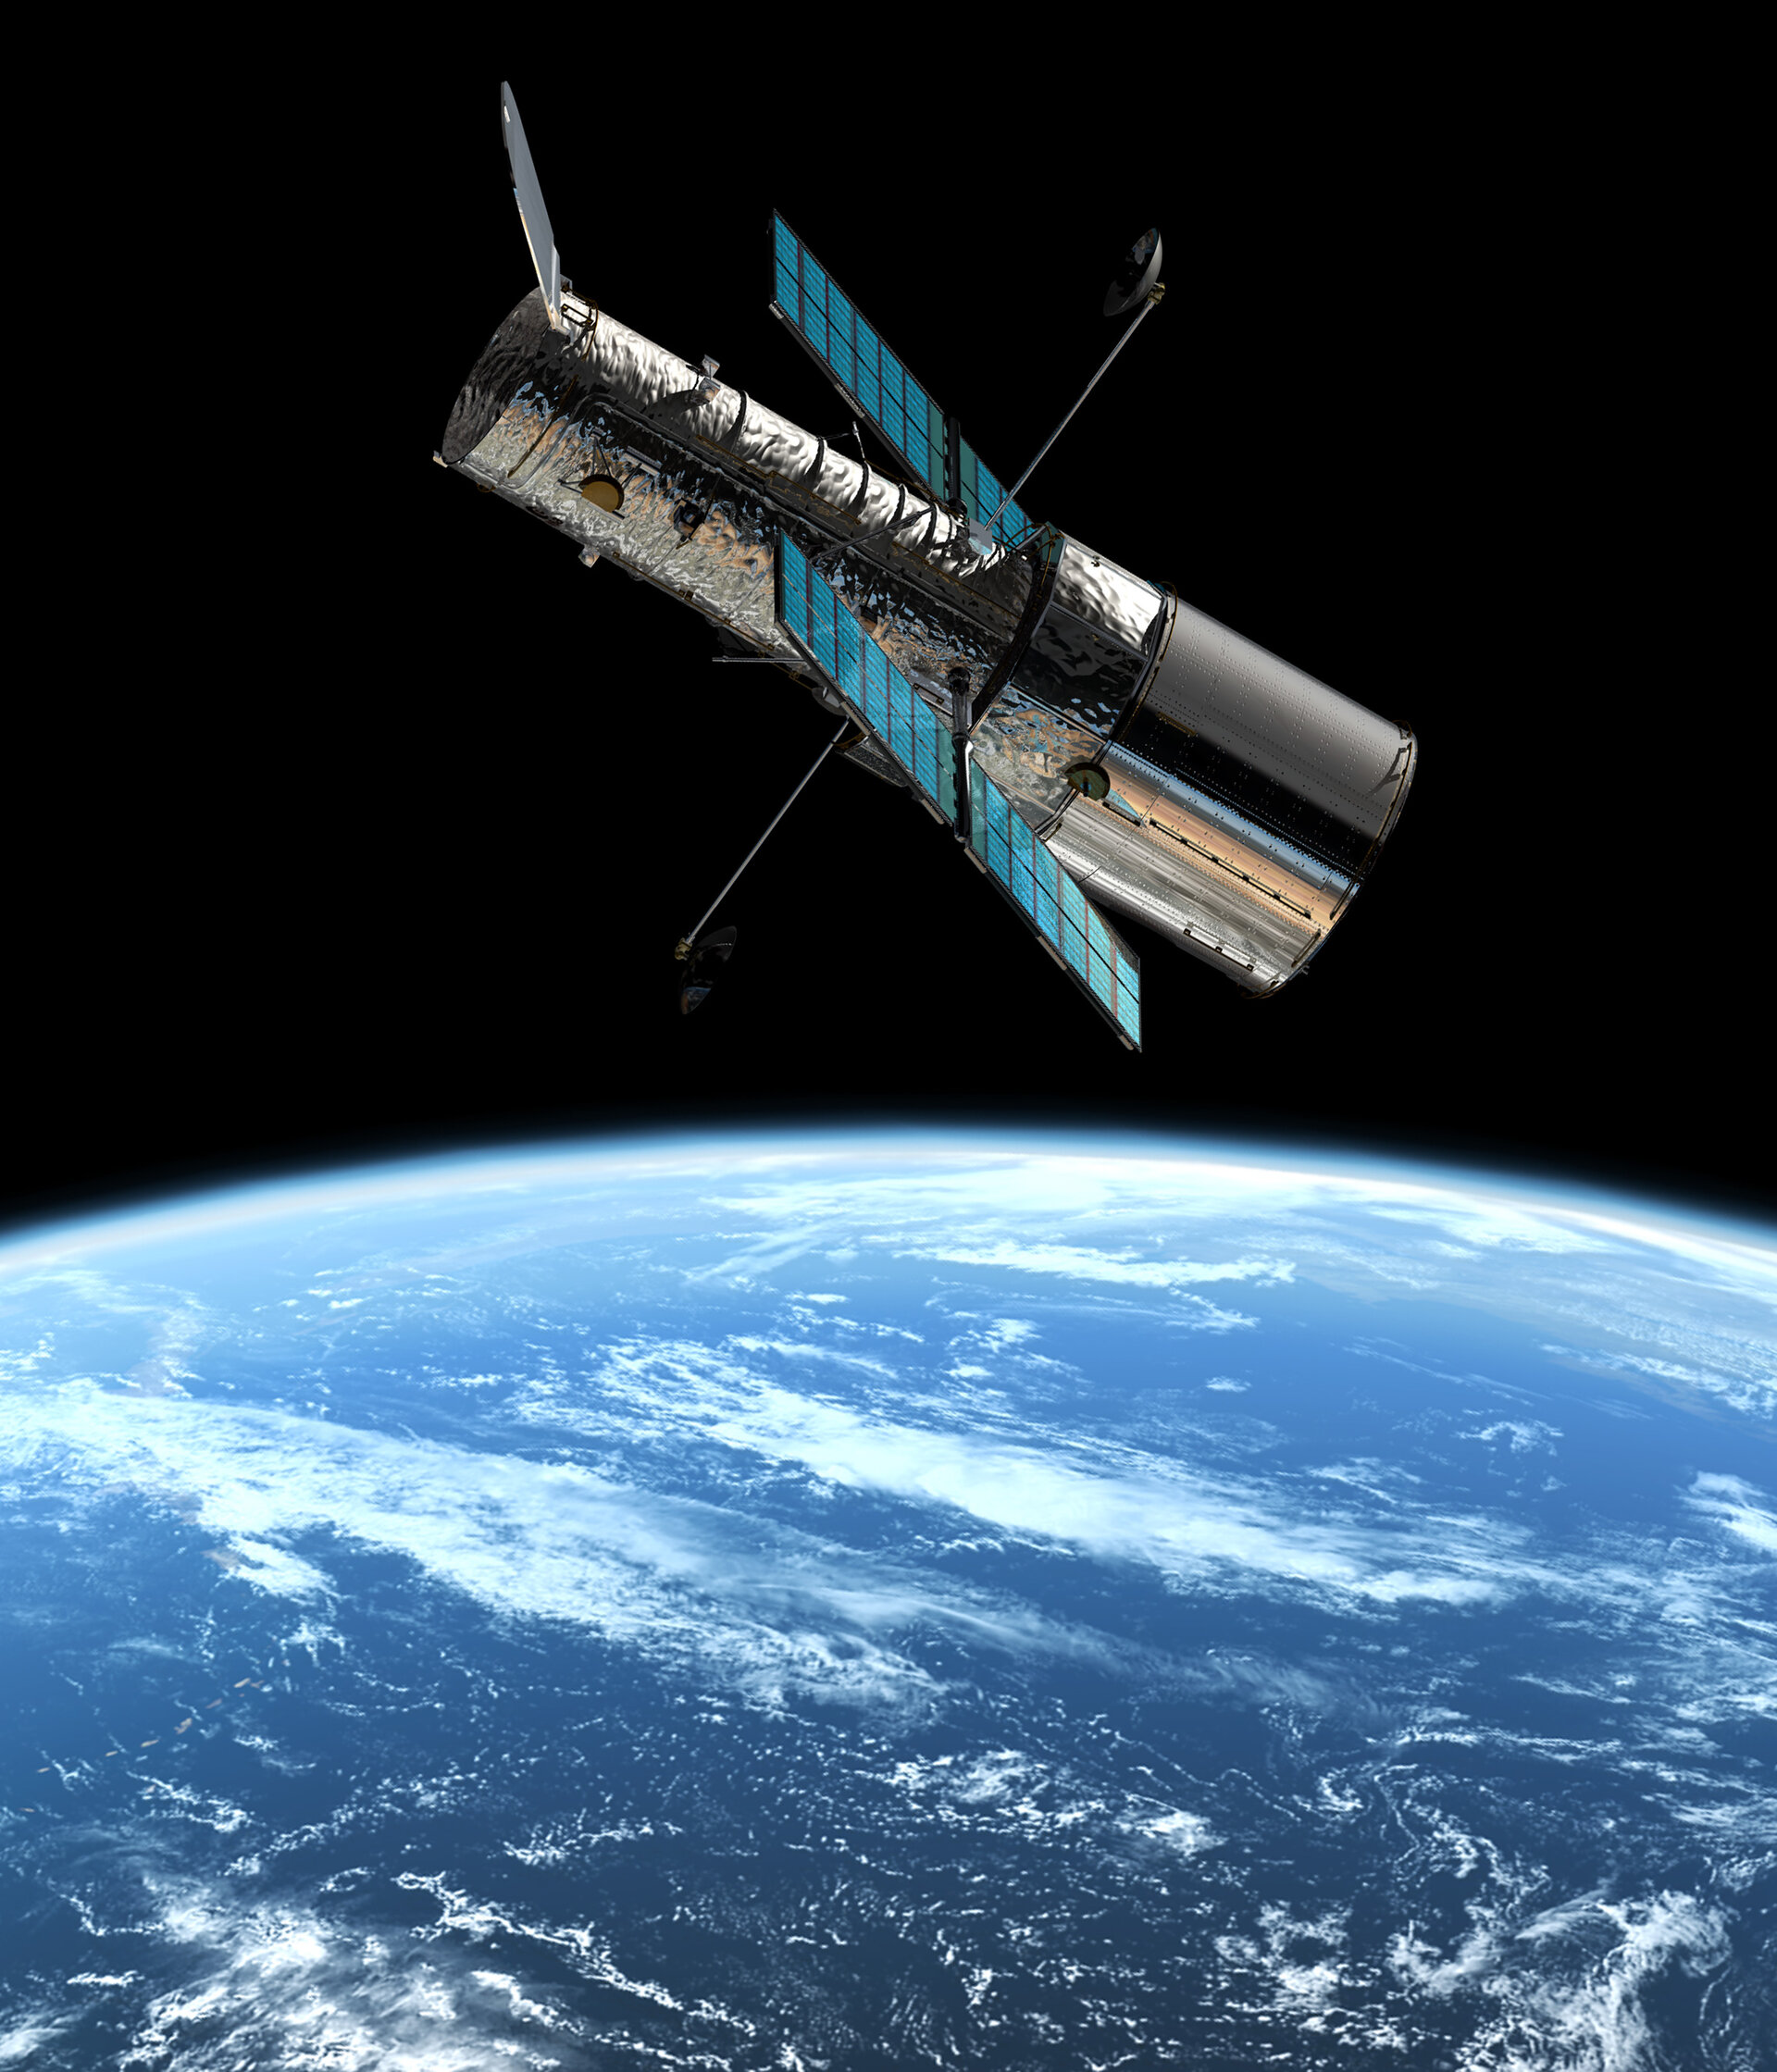 The joint ESA/NASA Hubble Space Telescope